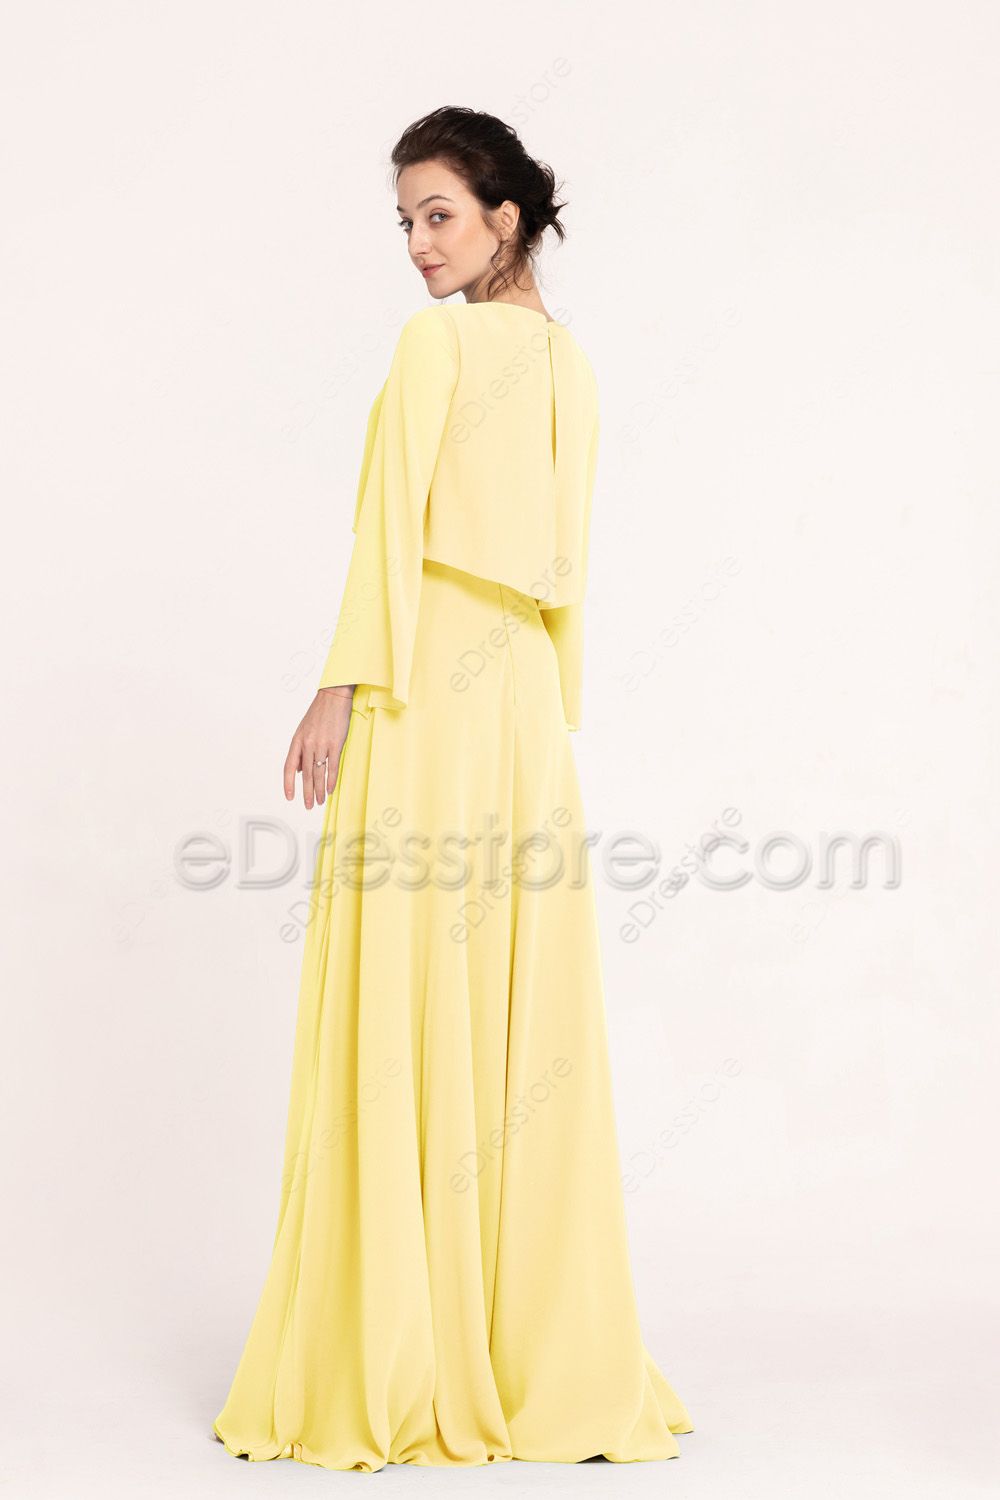 Modest LDS Light Yellow Bridesmaid Dresses Long Sleeves | eDresstore